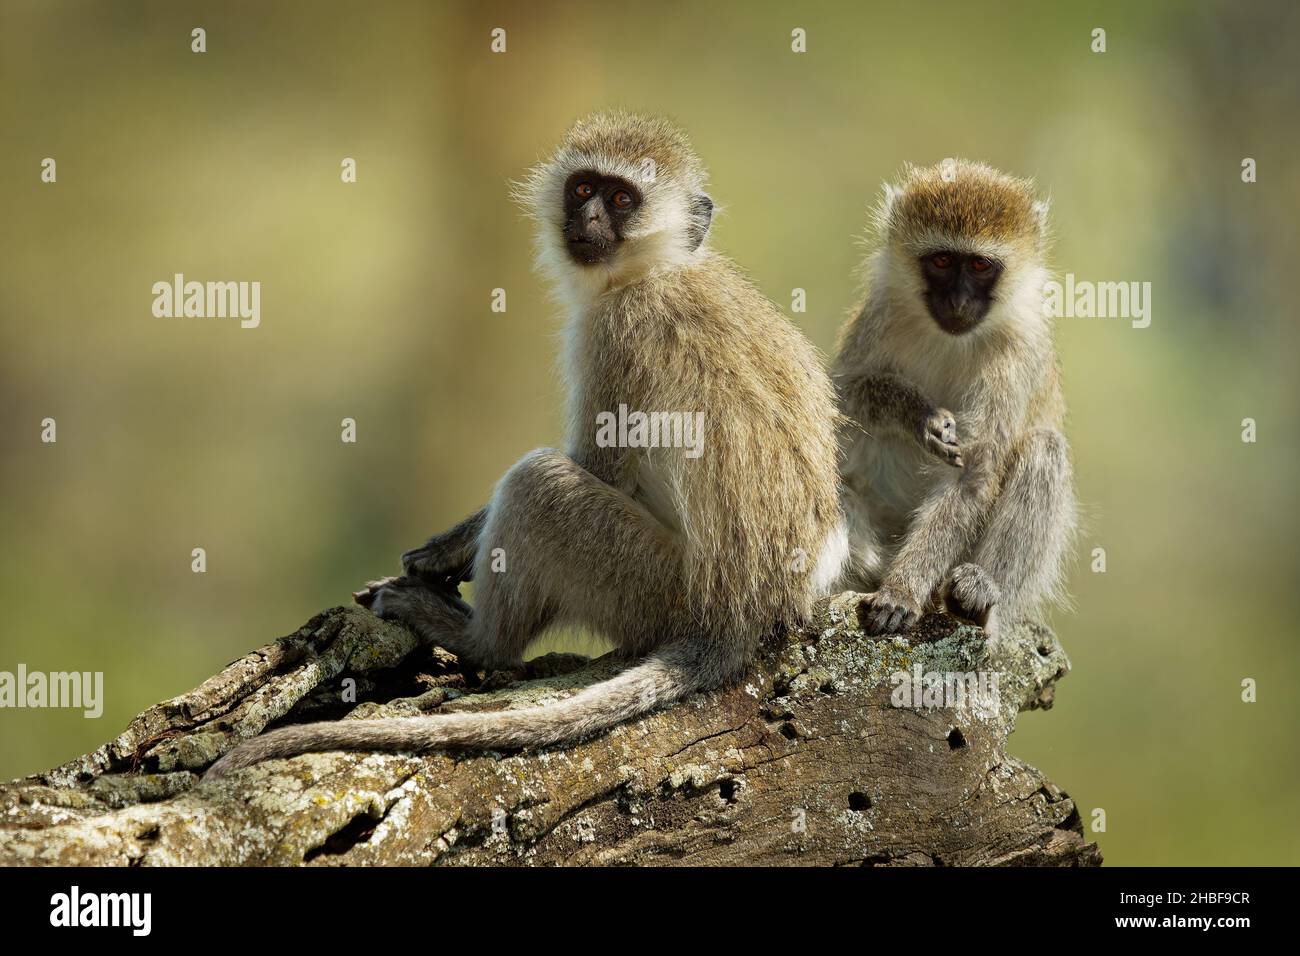 Scimmia Vervet - Chlorocebus pygerythrus - due scimmie di Cercopithecidae nativo dell'Africa, simile a malbrouck (Chlorocebus cynosuros), duo seduto o Foto Stock